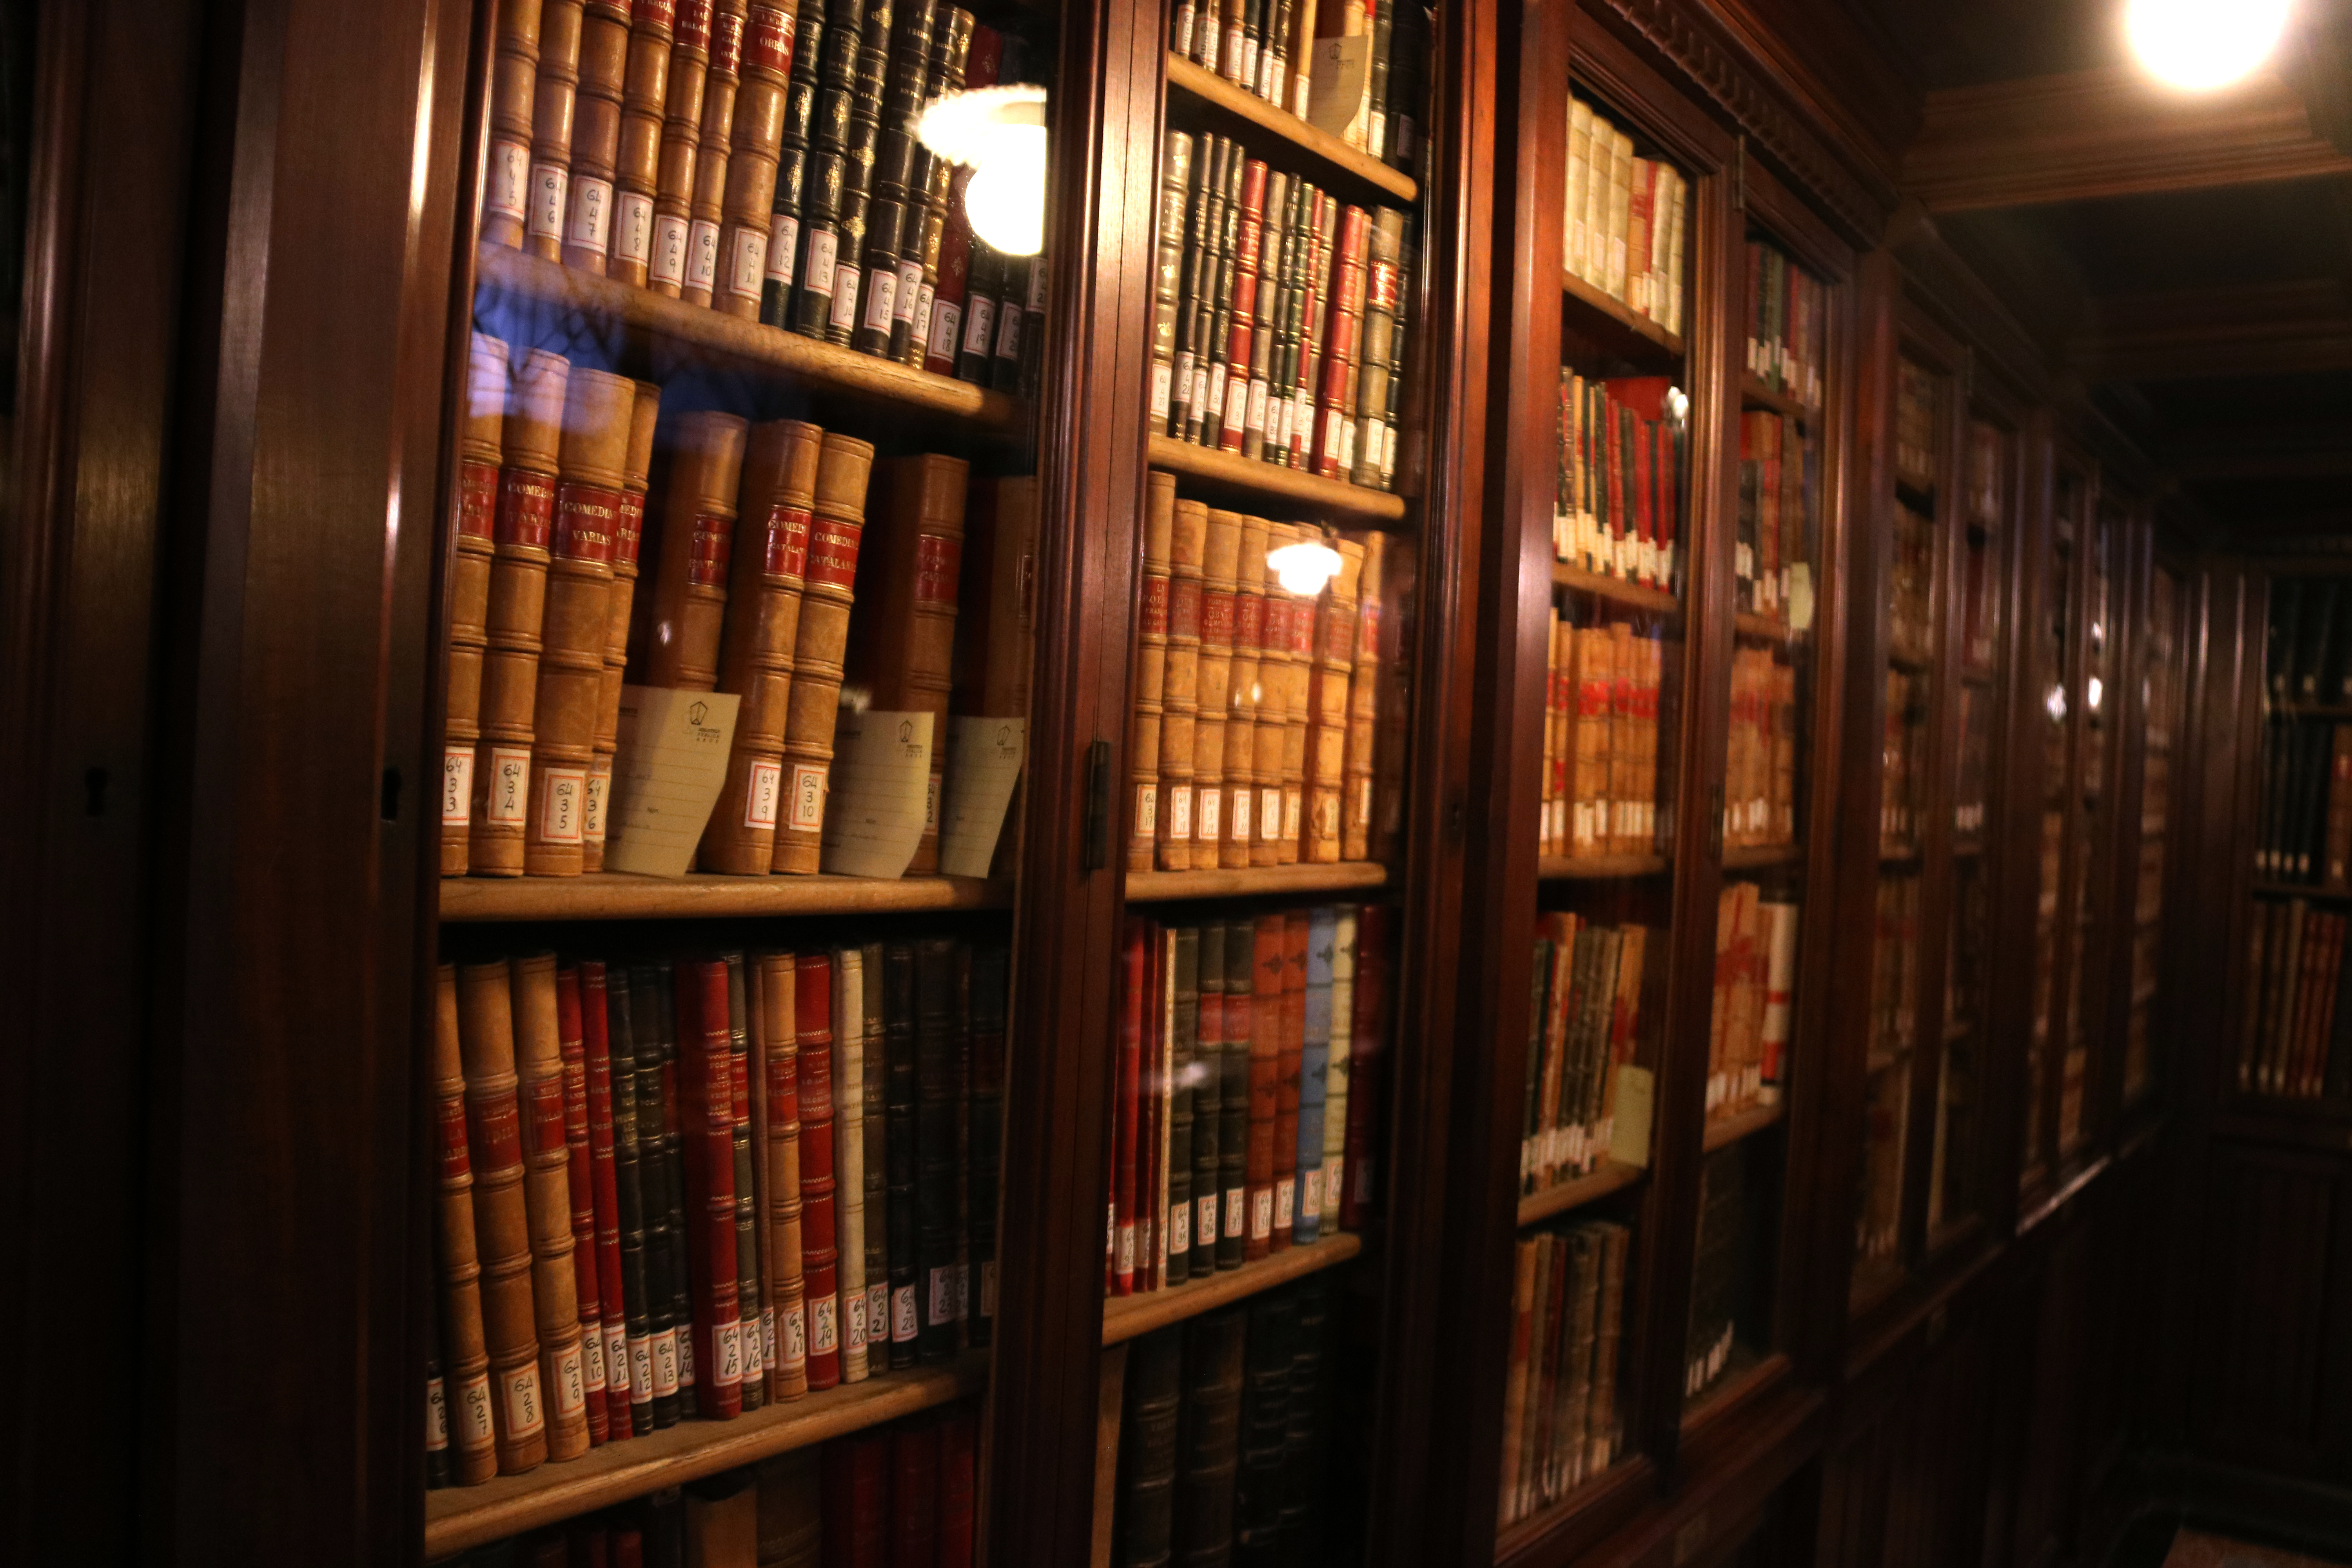 Book shelves in the Biblioteca Pública Arús